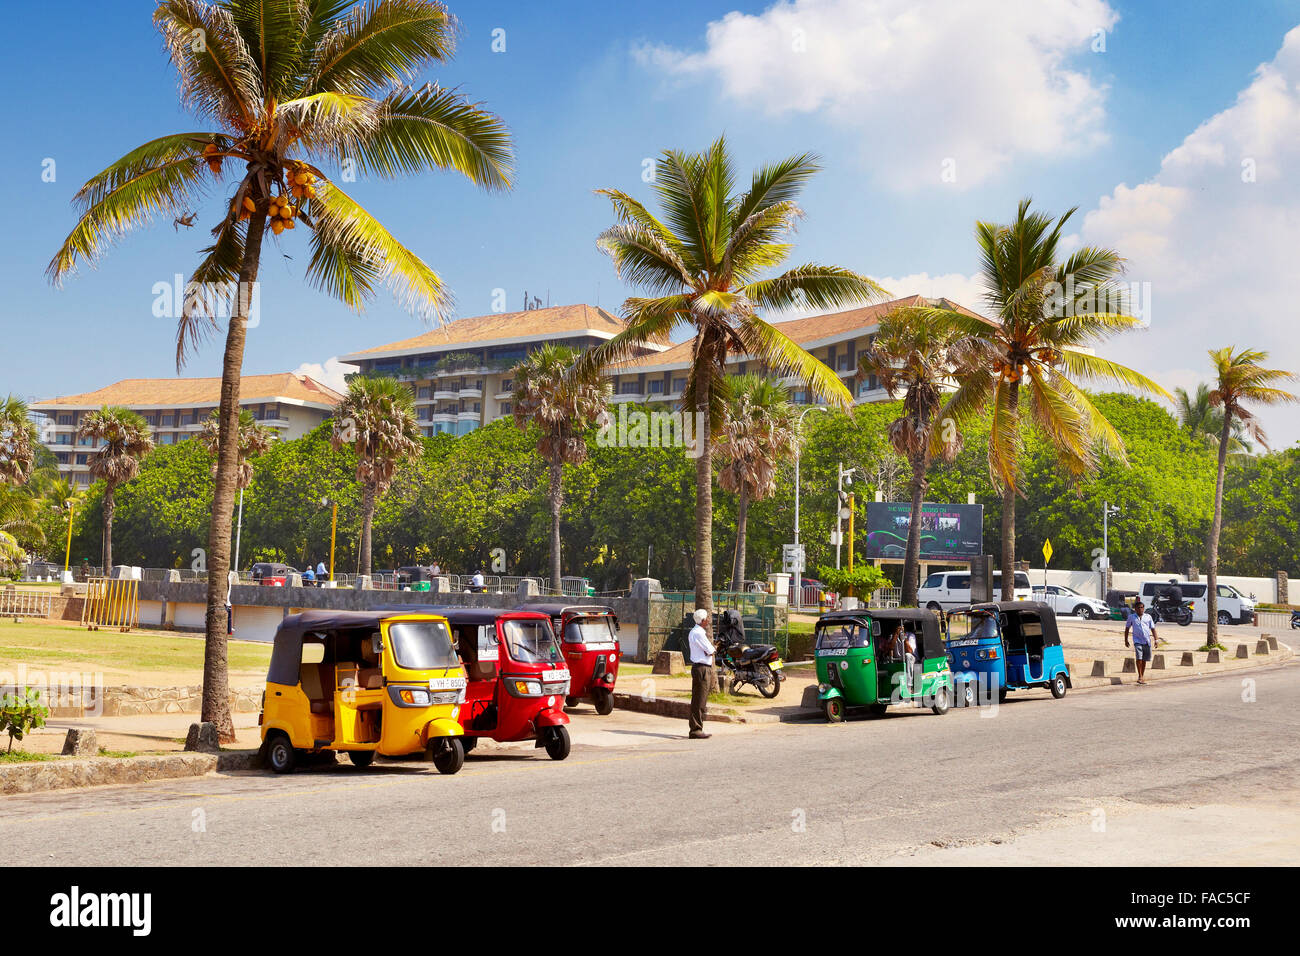 Sri Lanka - Colombo city, tuk tuk taxi, typical view on the streets Stock Photo